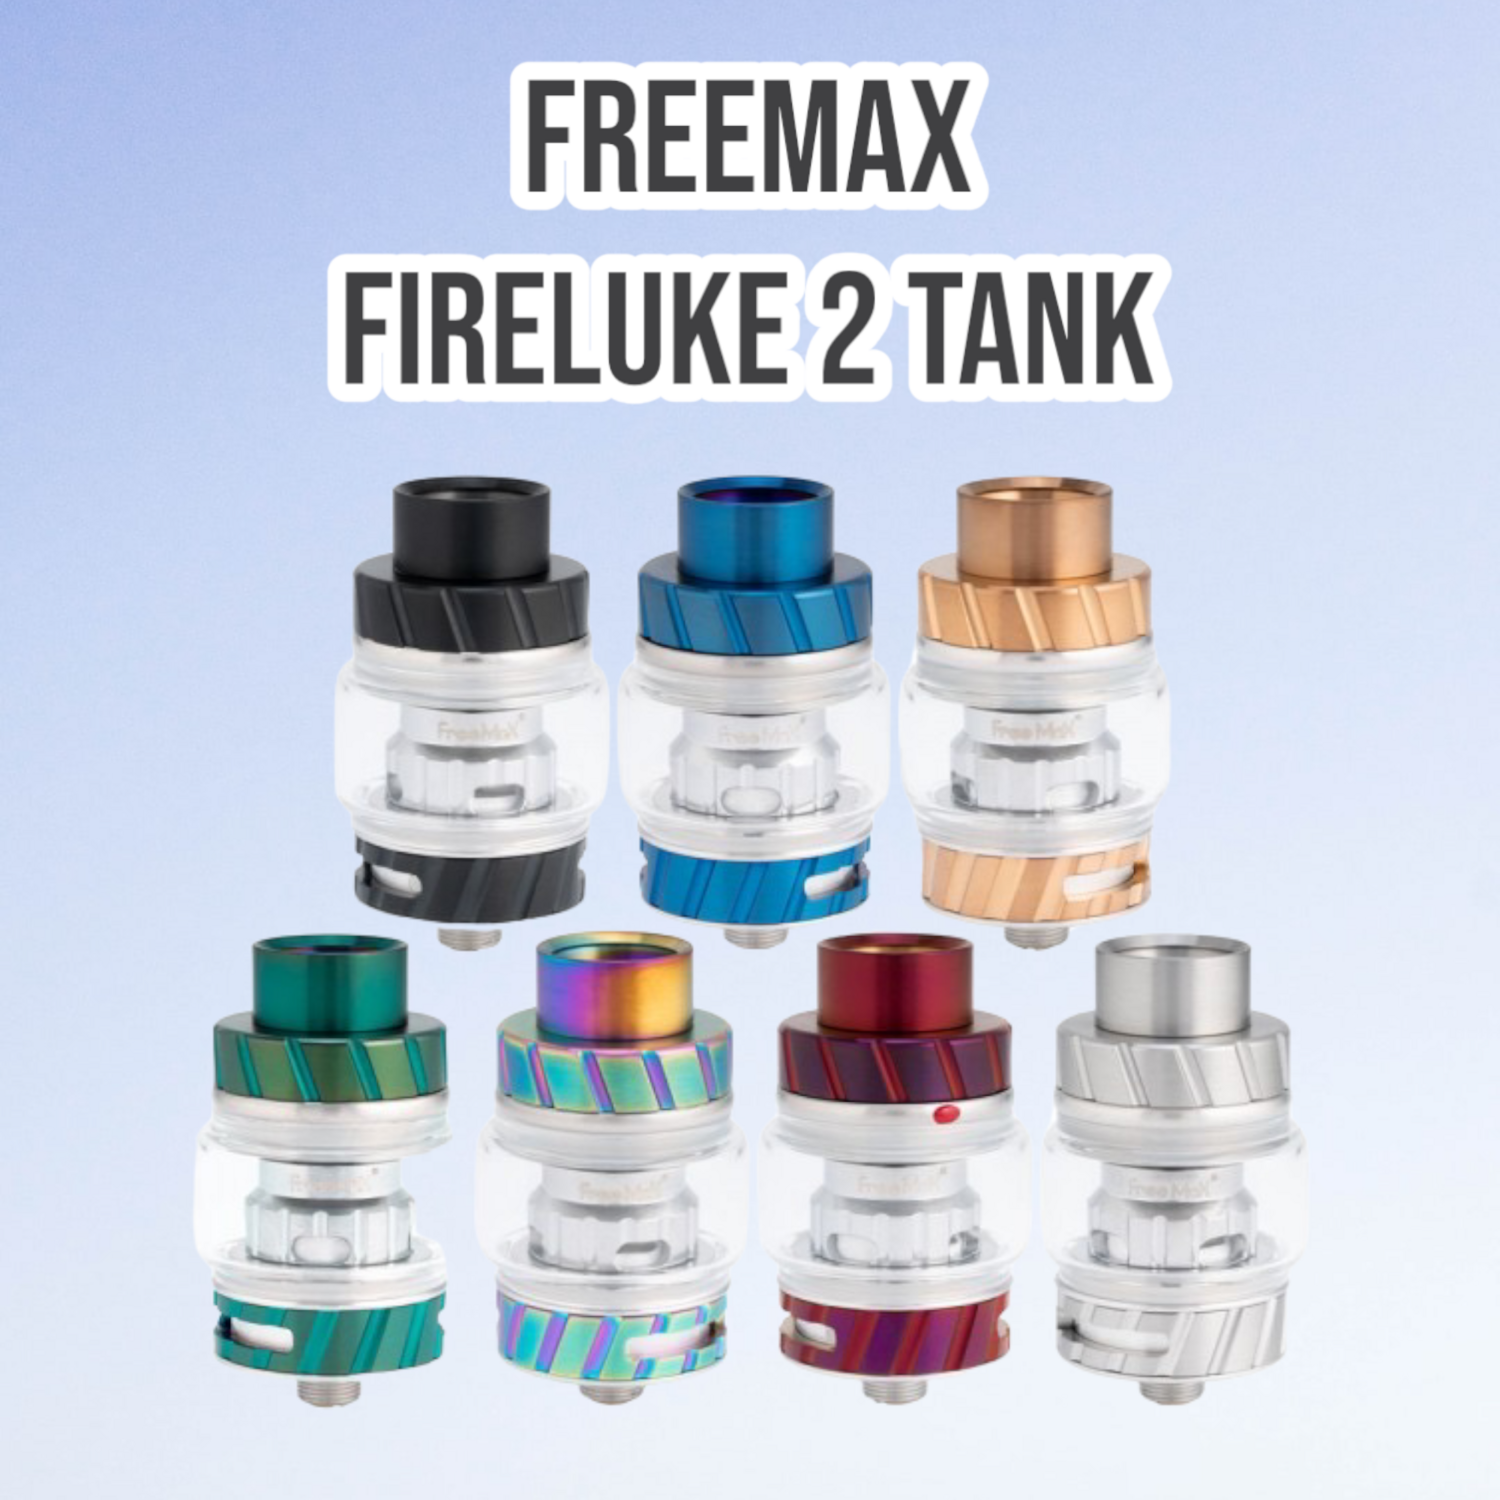 Freemax Fireluke 2 Tank